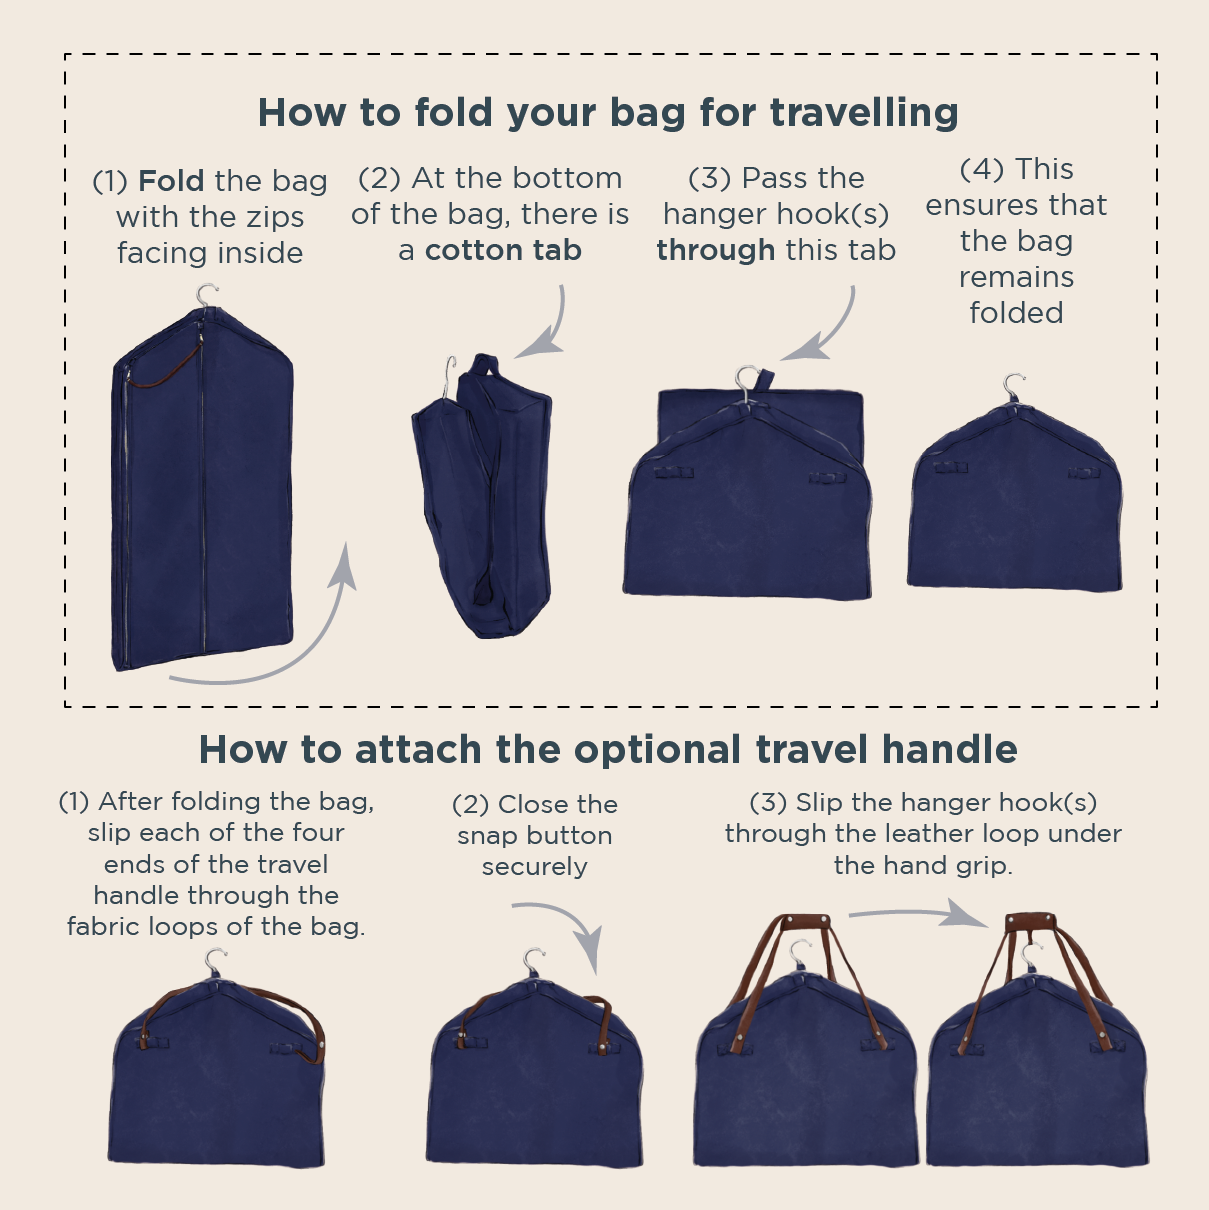 Elite Travel Personalized Garment Bag